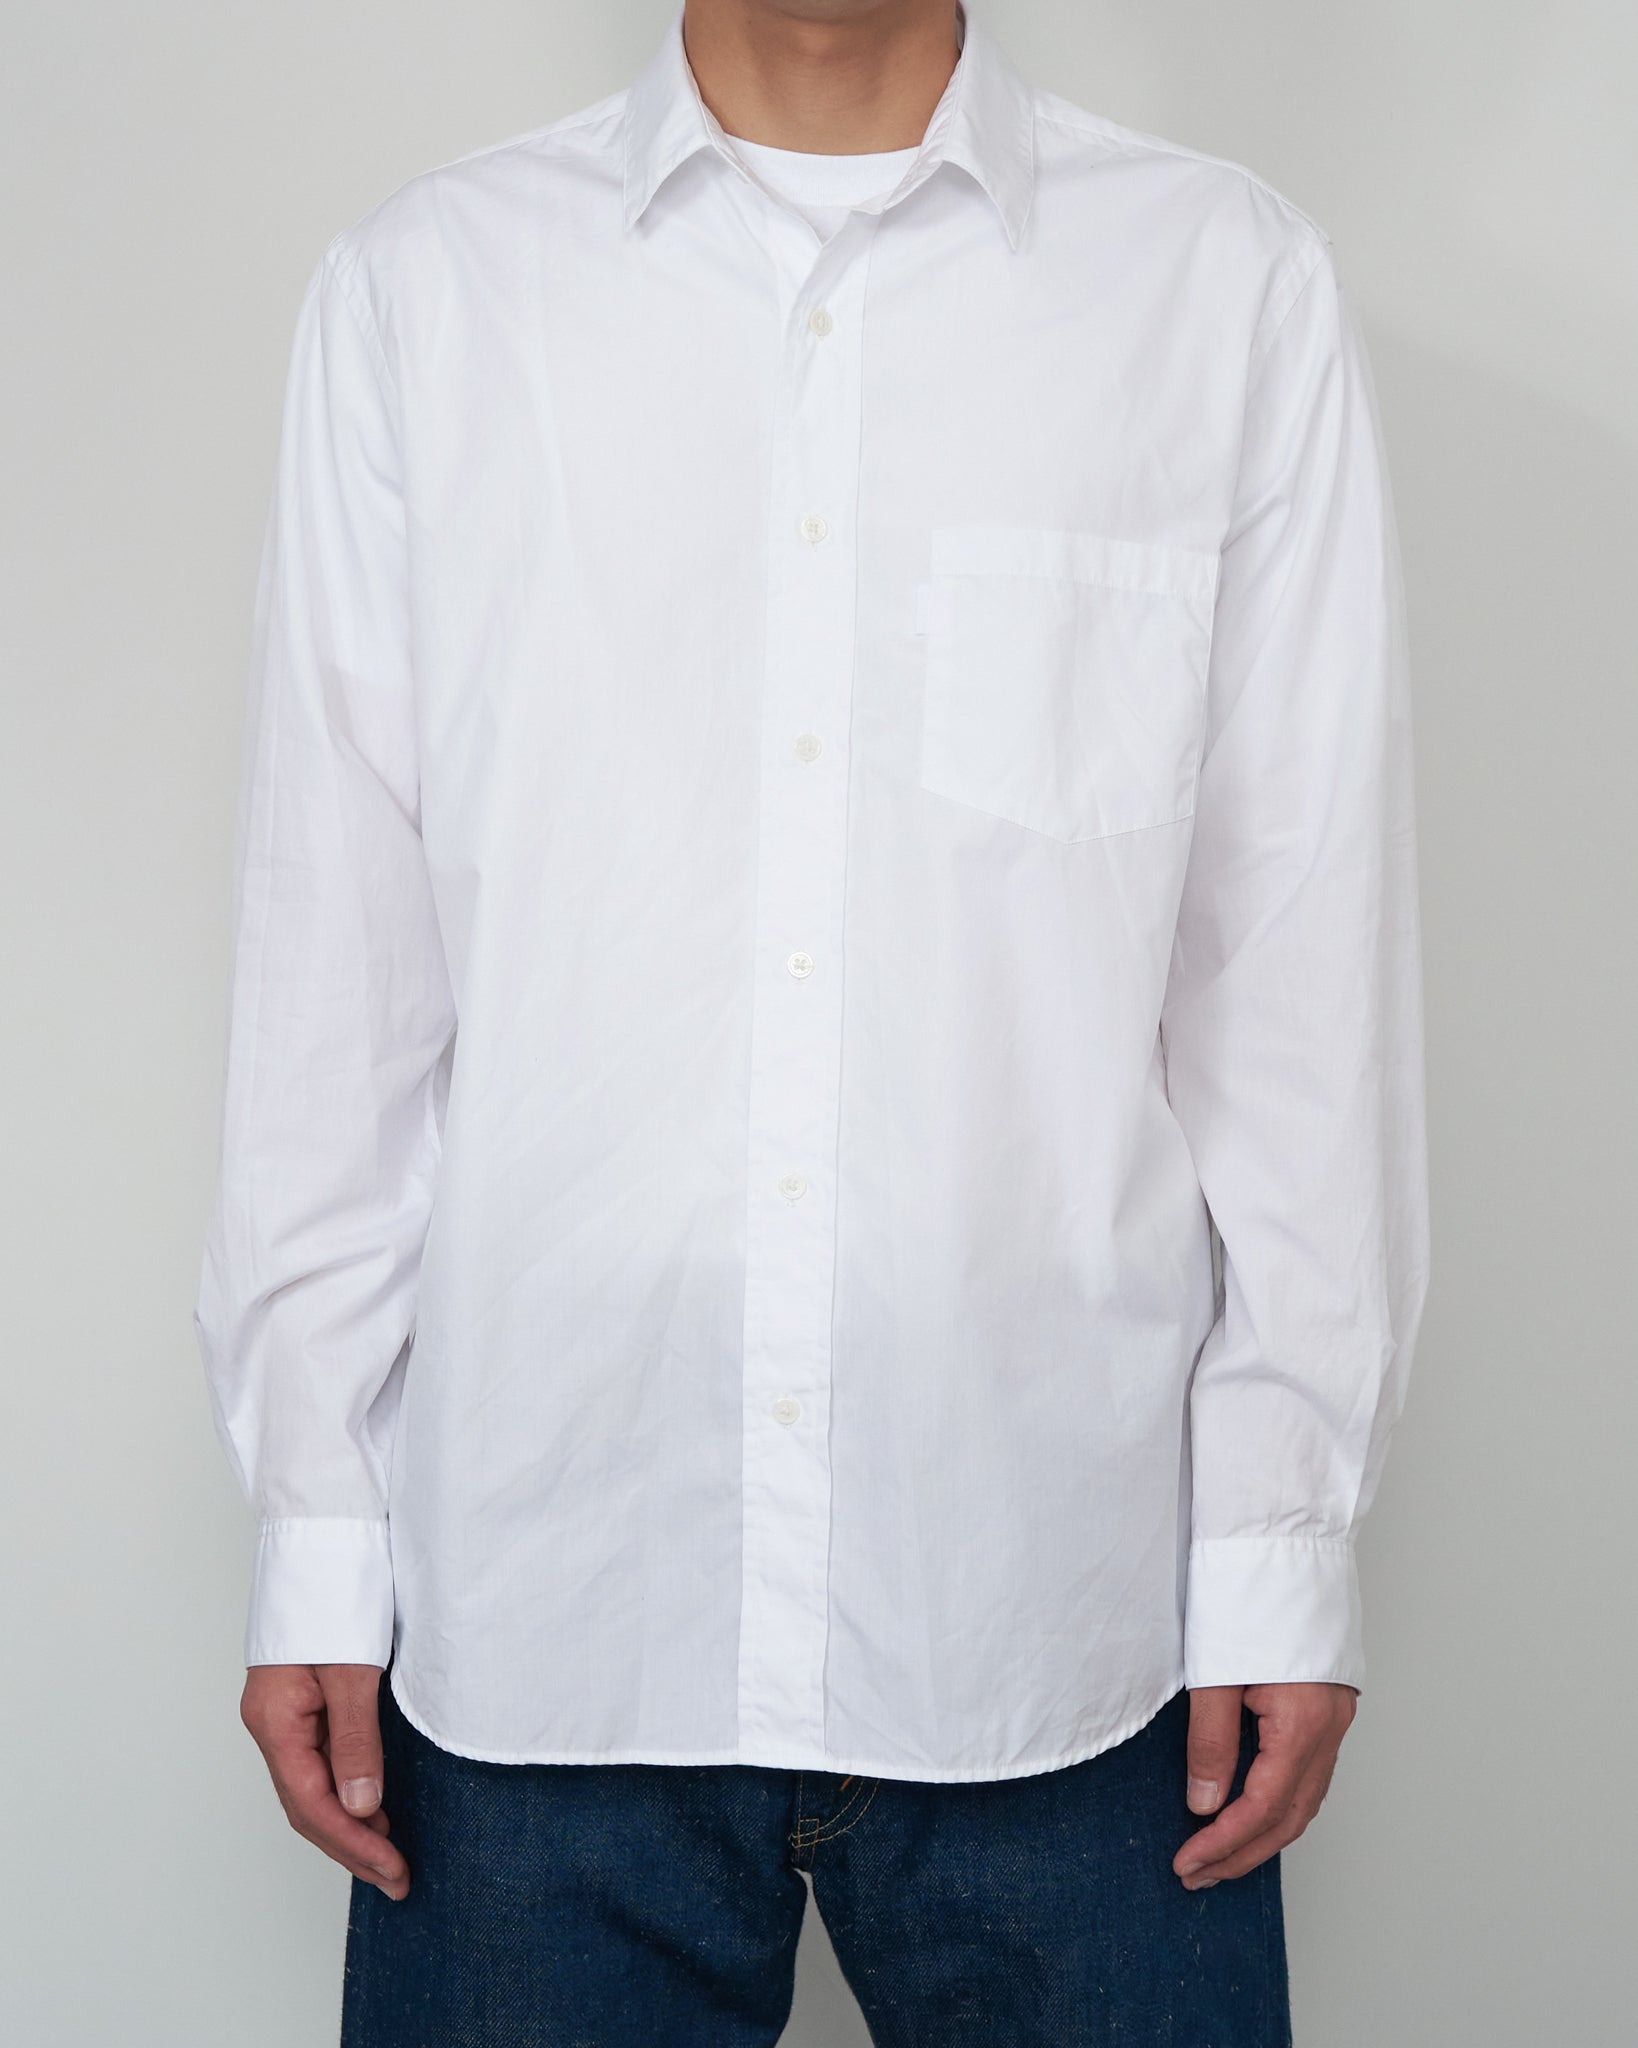 S H GMBT-001 Regular Collar Shirt(Alumo), White